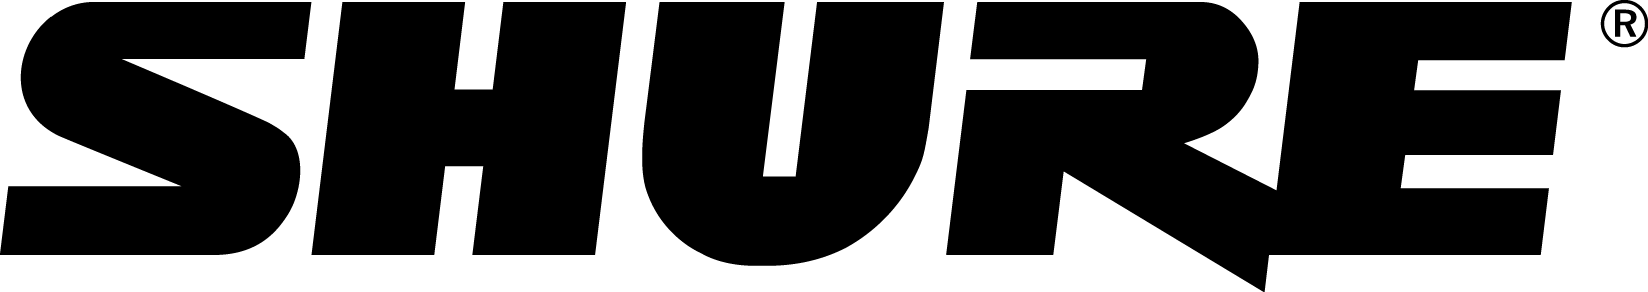 Shure-Logo-without-Tagline_Black